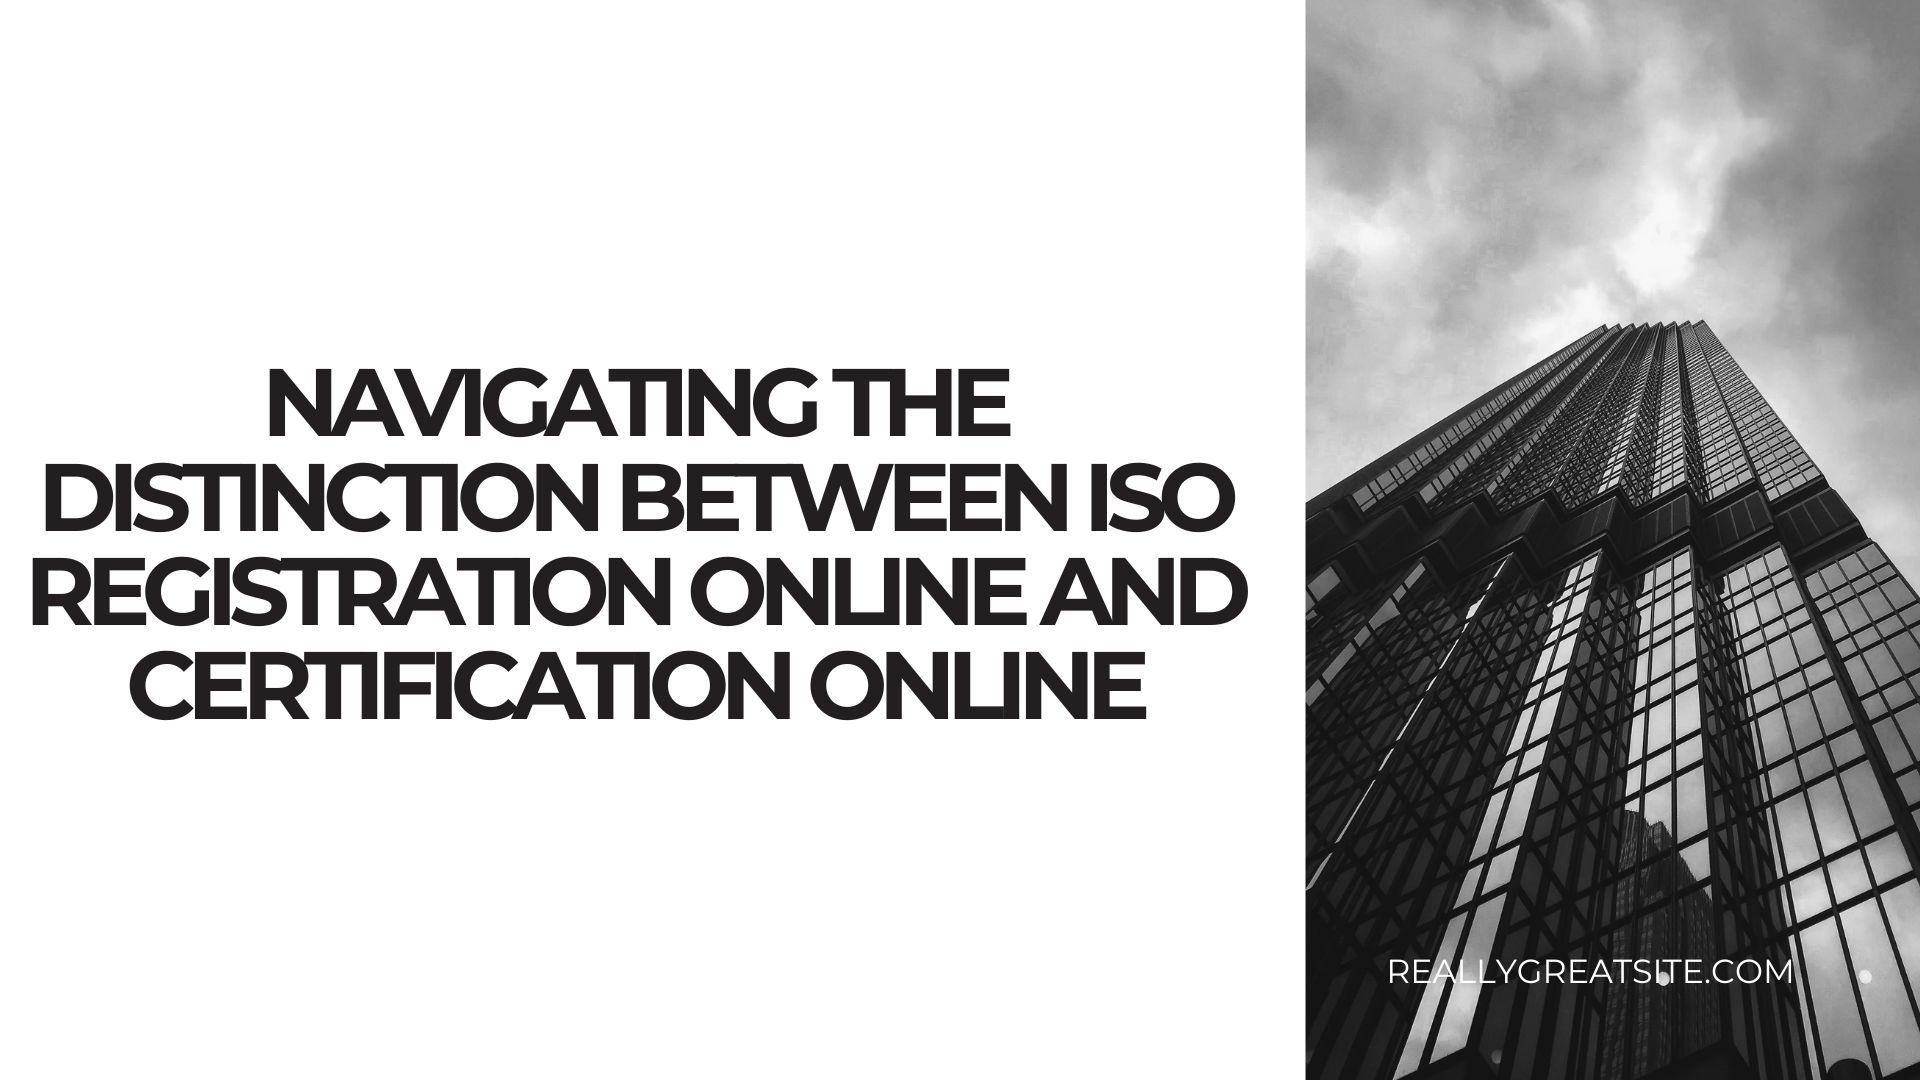 Navigating the Distinction Between ISO Registration Online and Certification Online